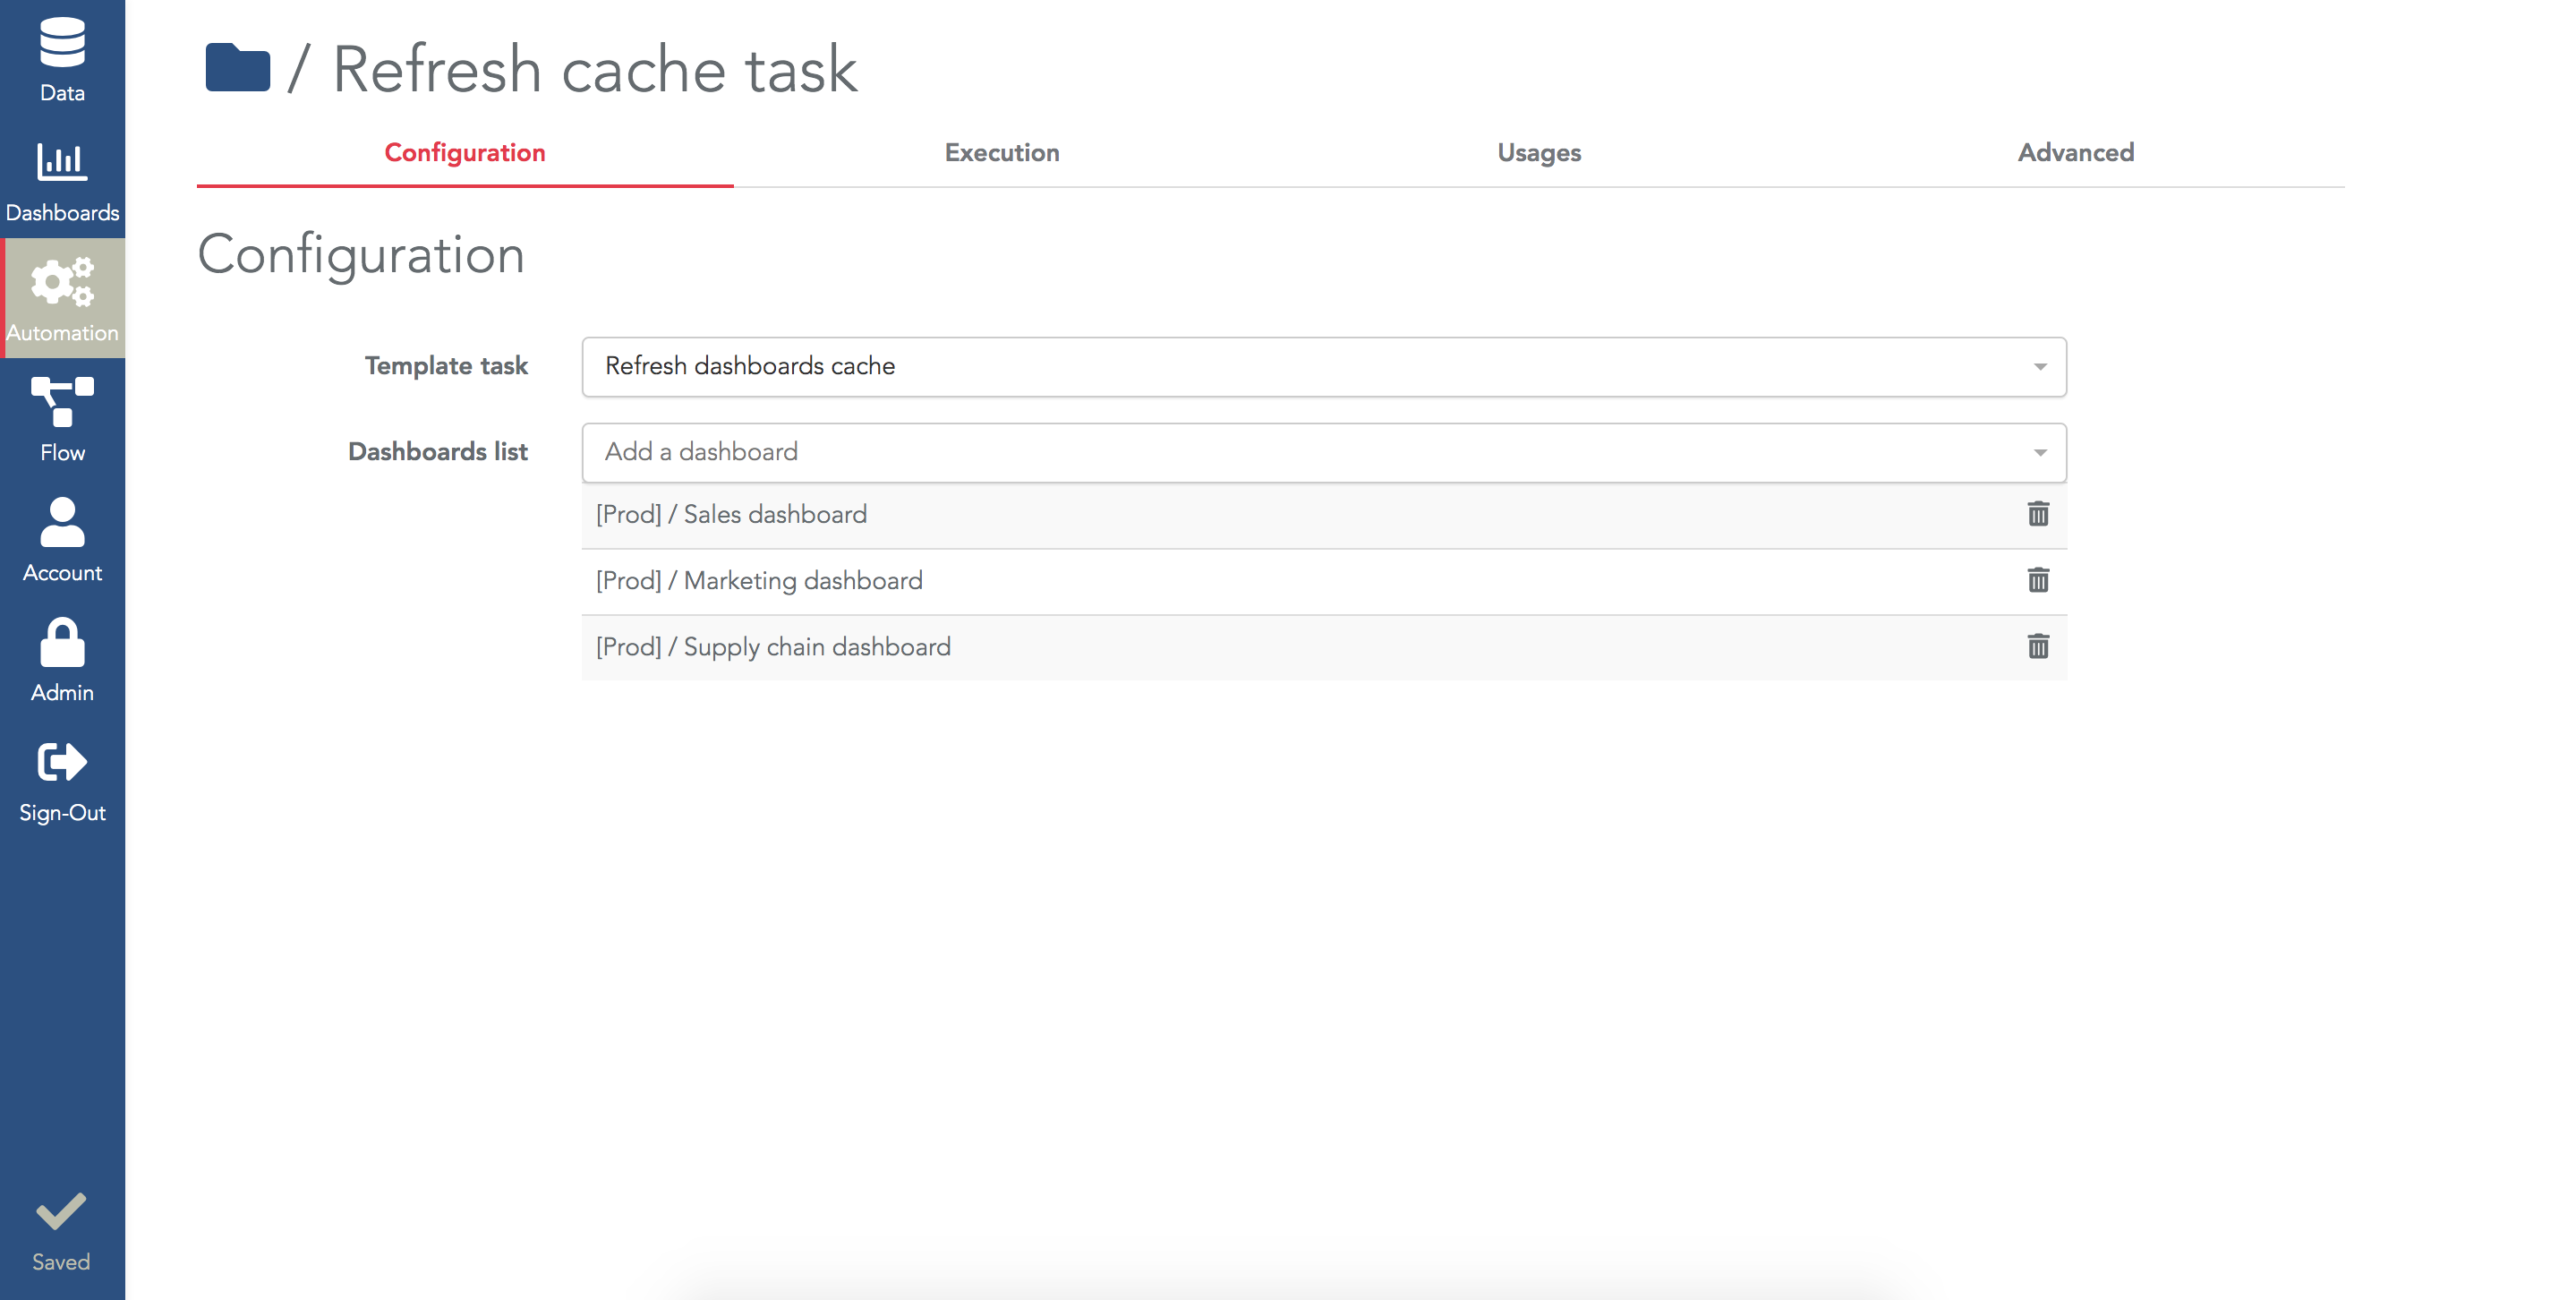 Configure the reload cache task